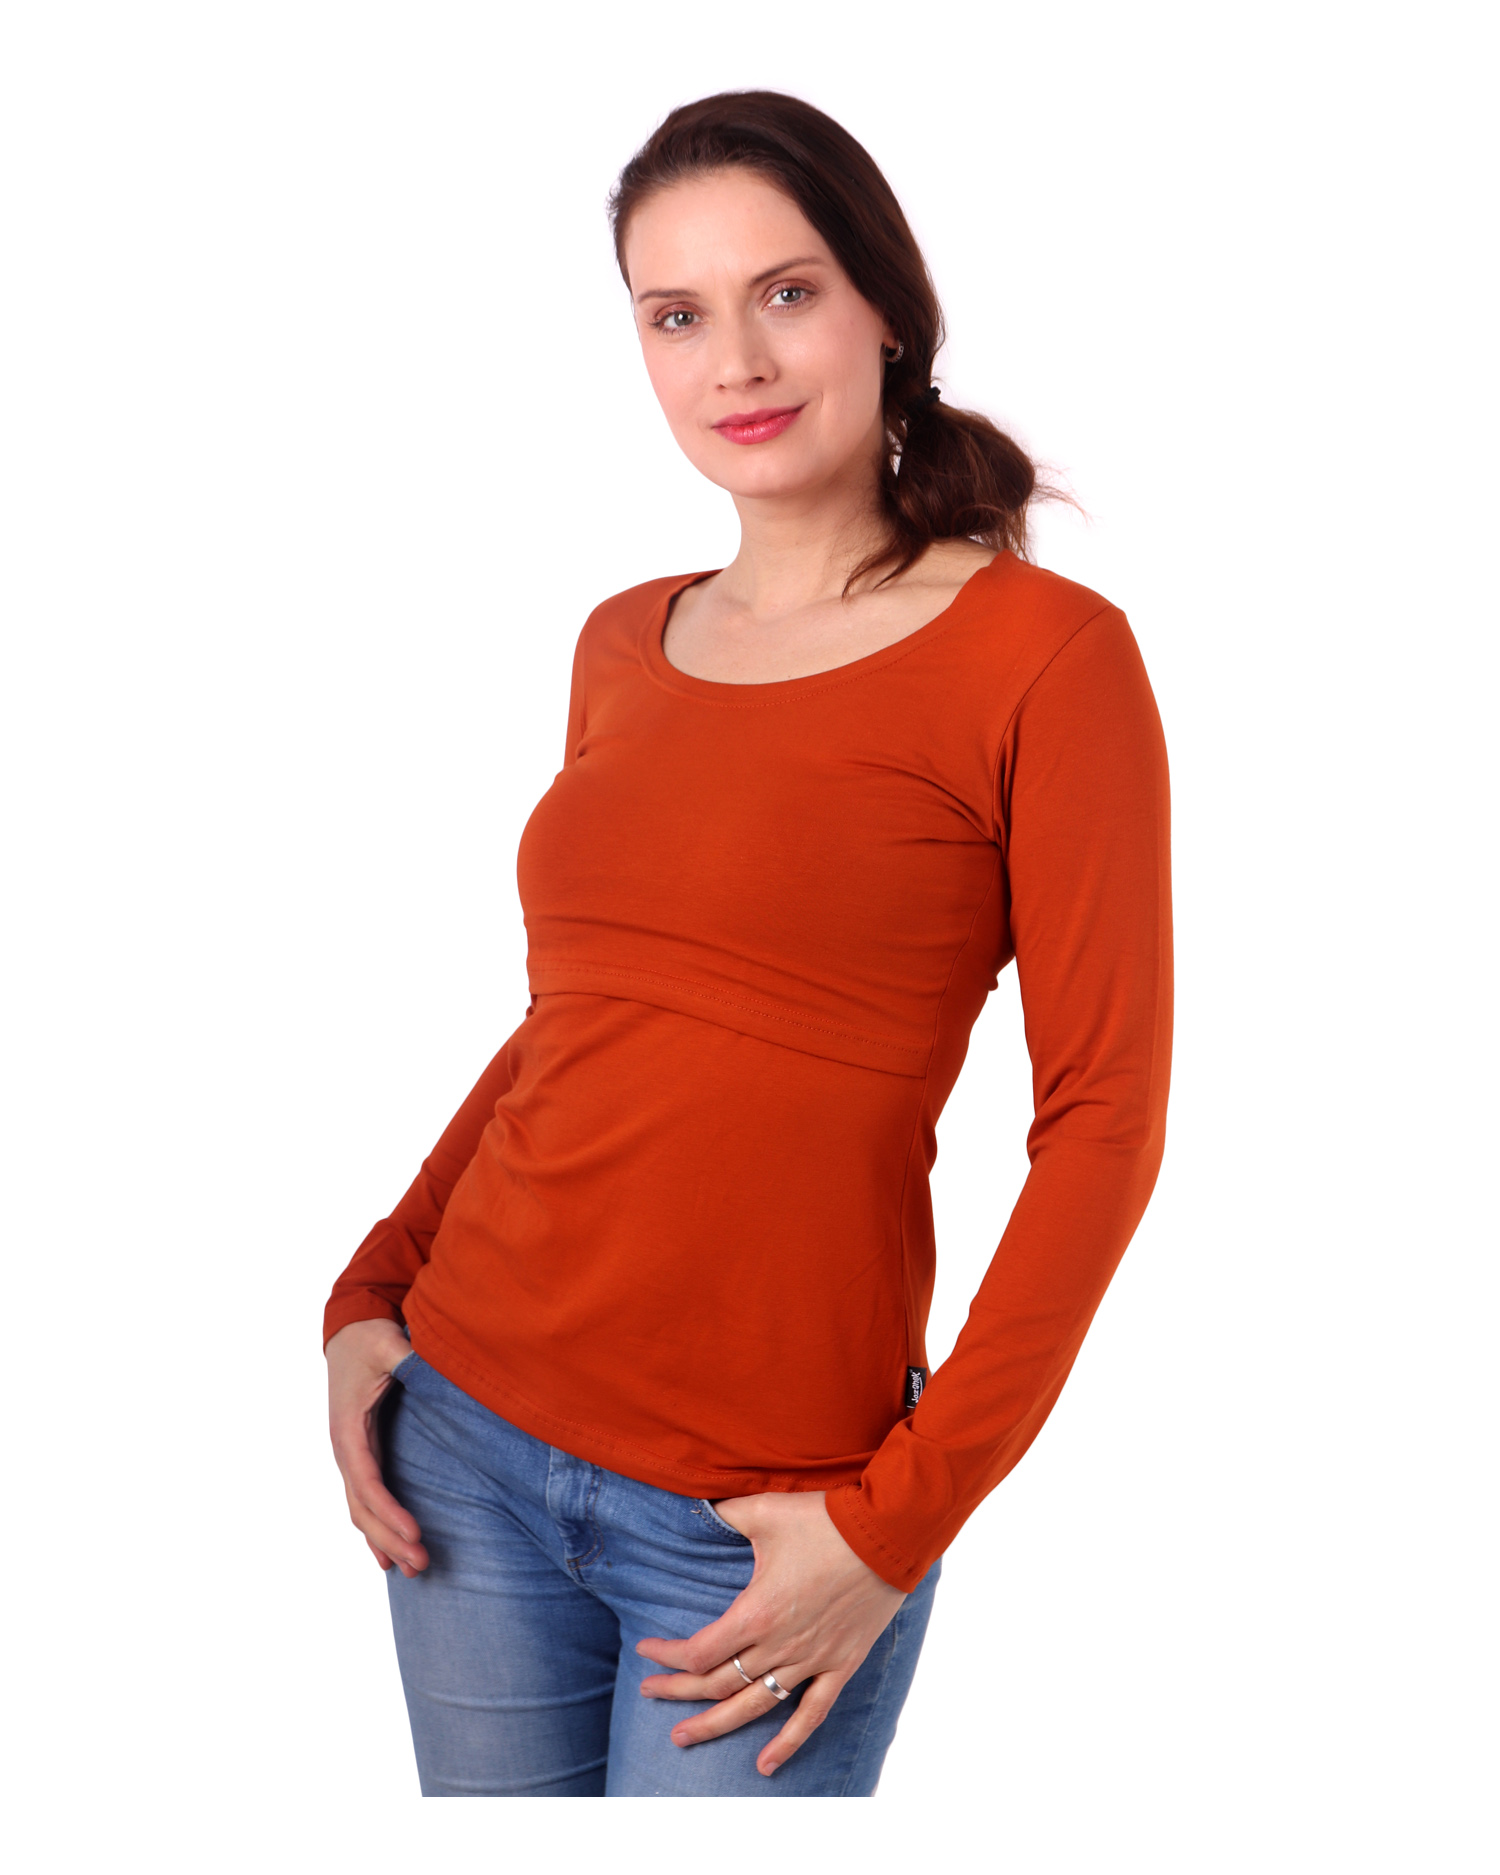 Breast-feeding T-shirt Katerina, long sleeves, cinnamon